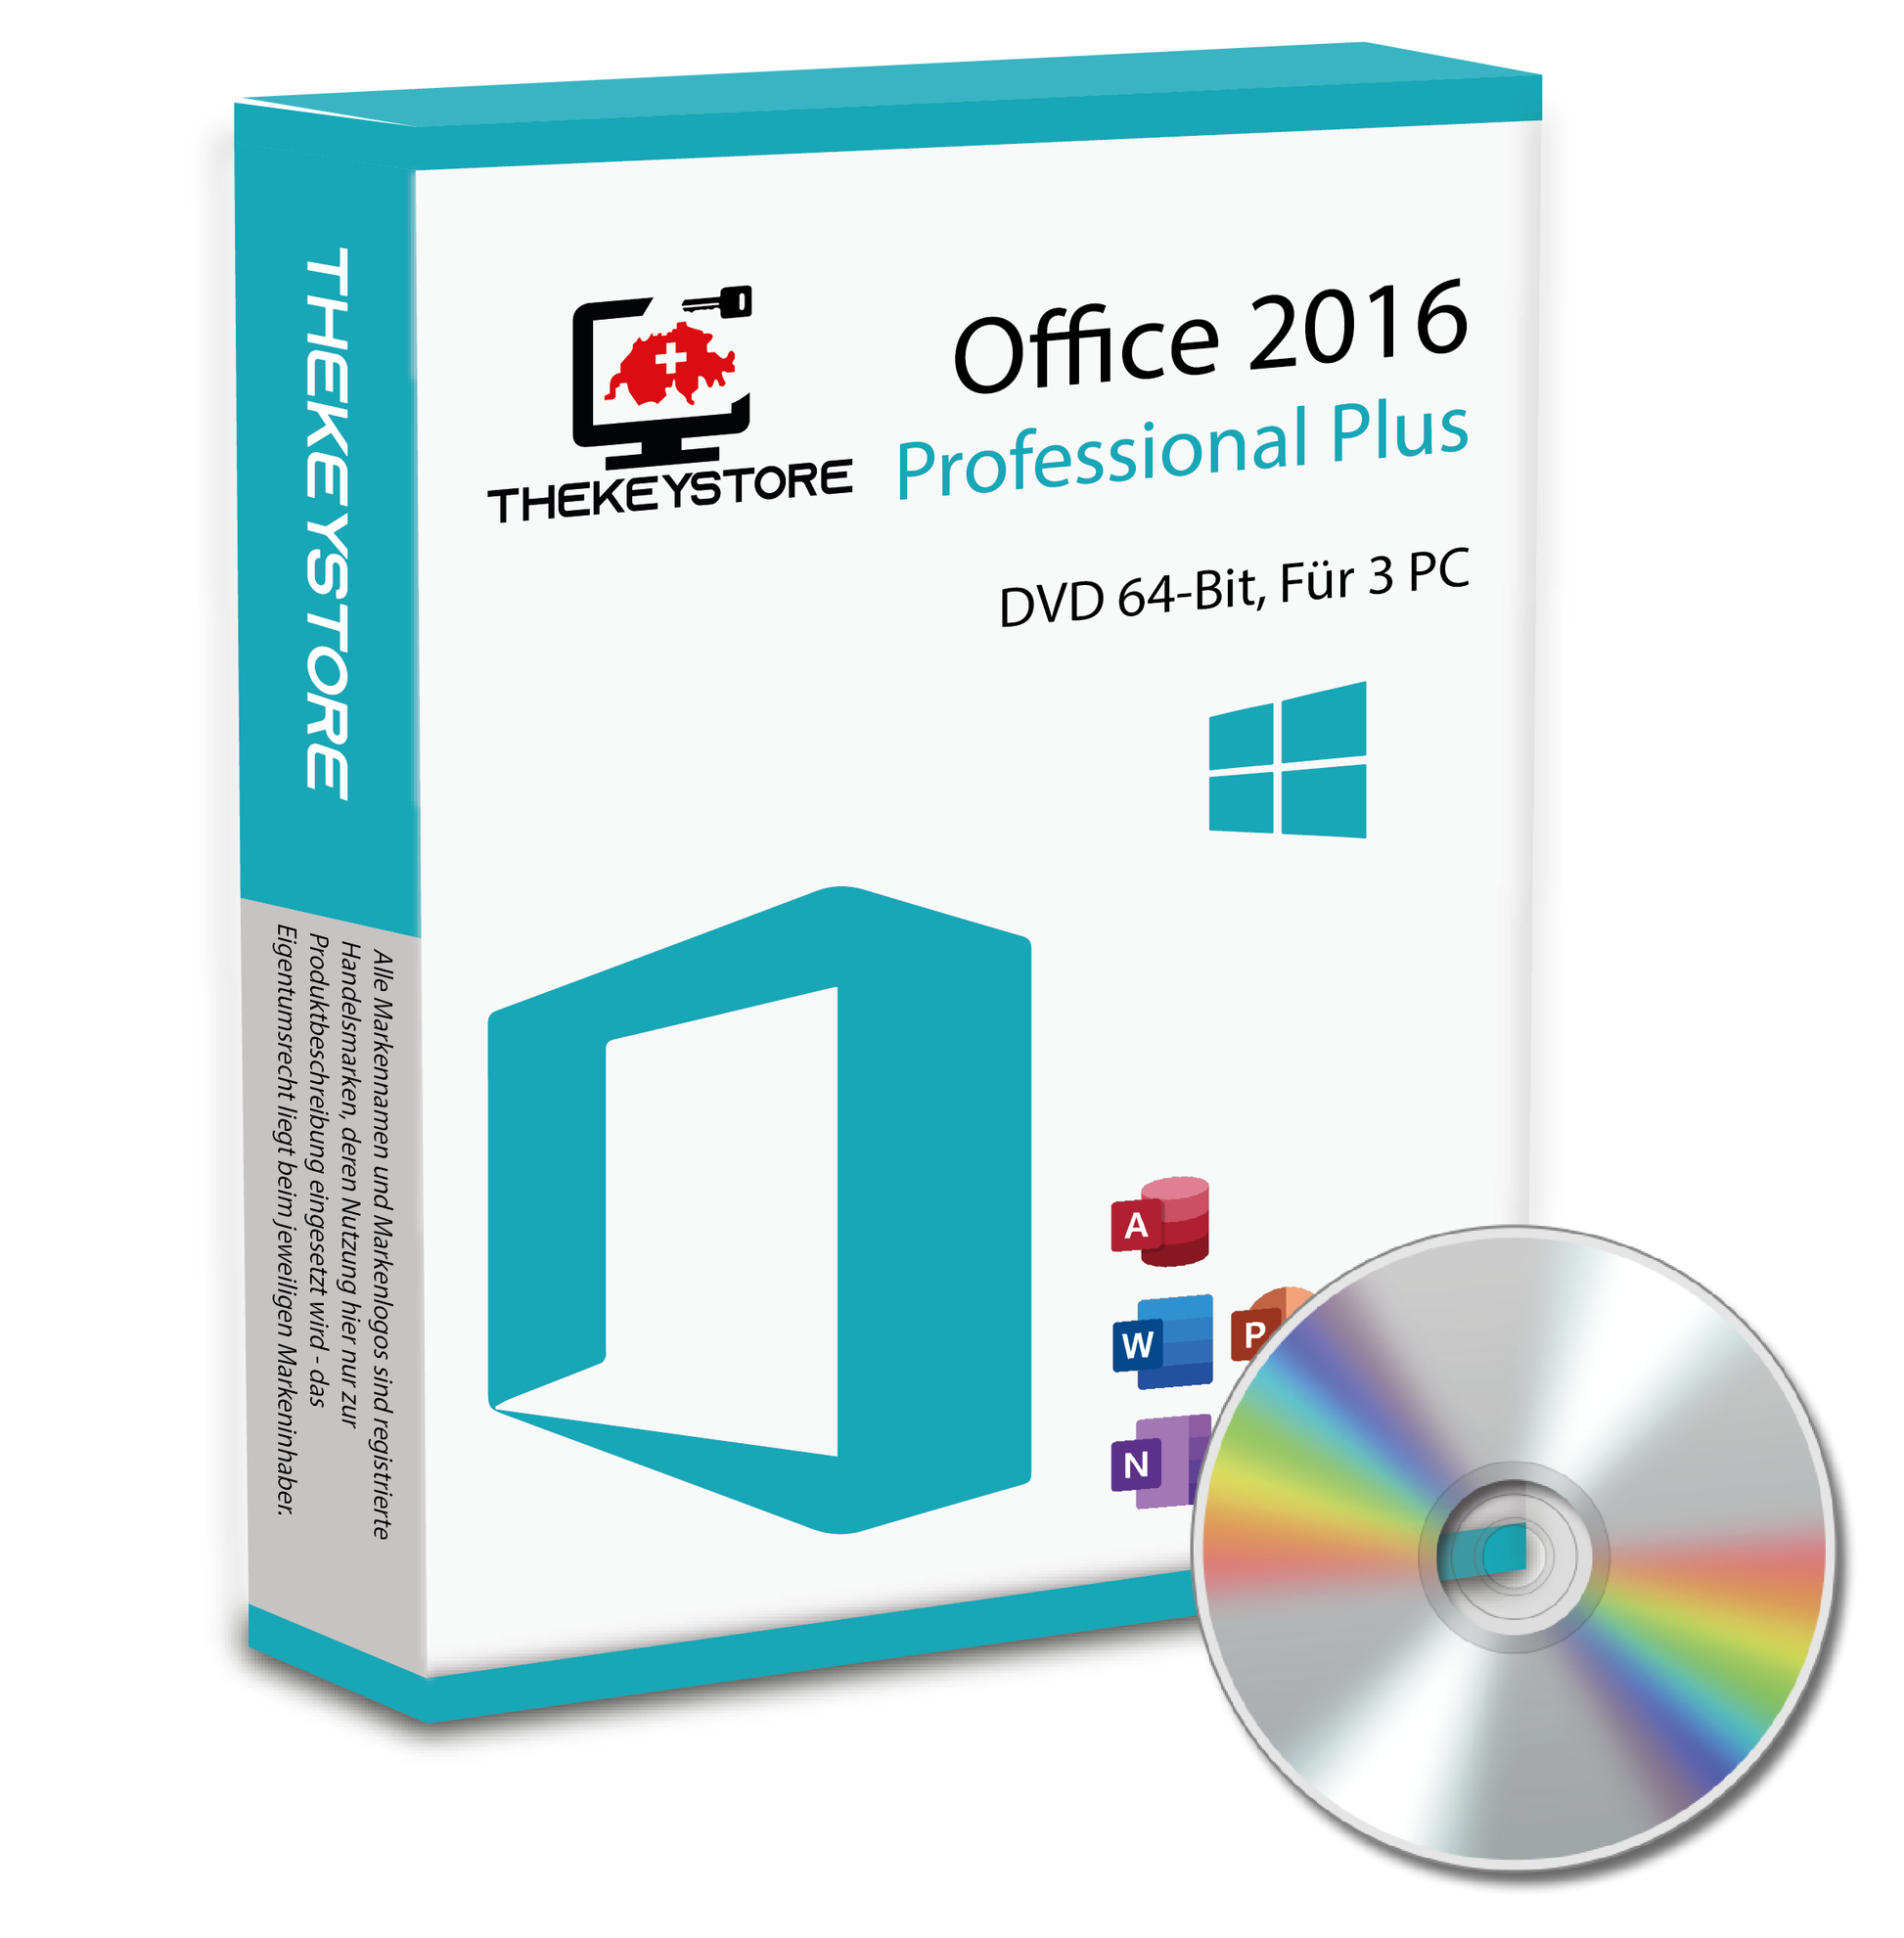 Microsoft Office 2016 Professional Plus - Für 3 PC - TheKeyStore Schweiz